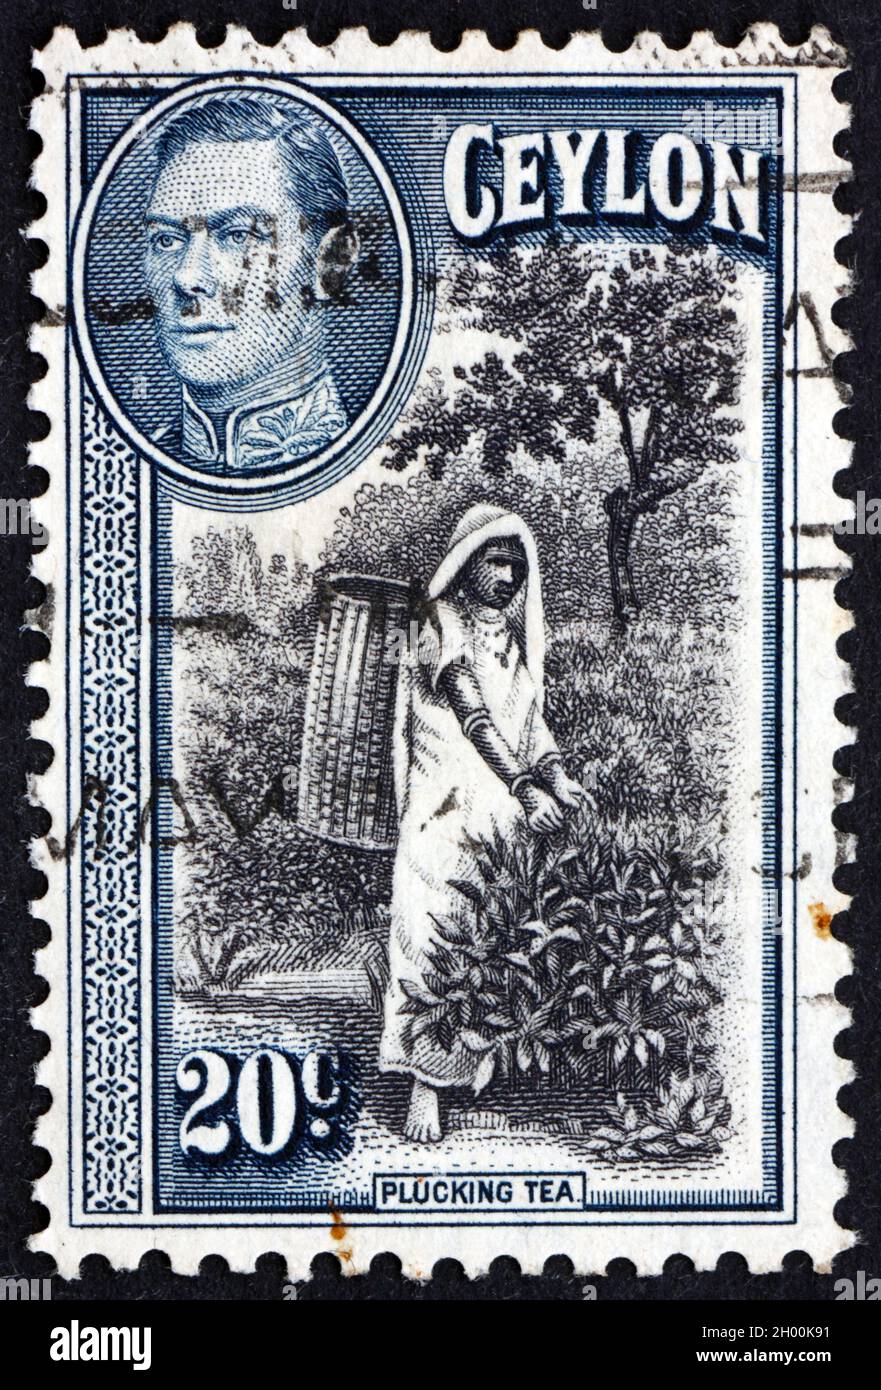 SRI LANKA - CIRCA 1938: a stamp printed in Sri Lanka shows Picking Tea, circa 1938 Stock Photo